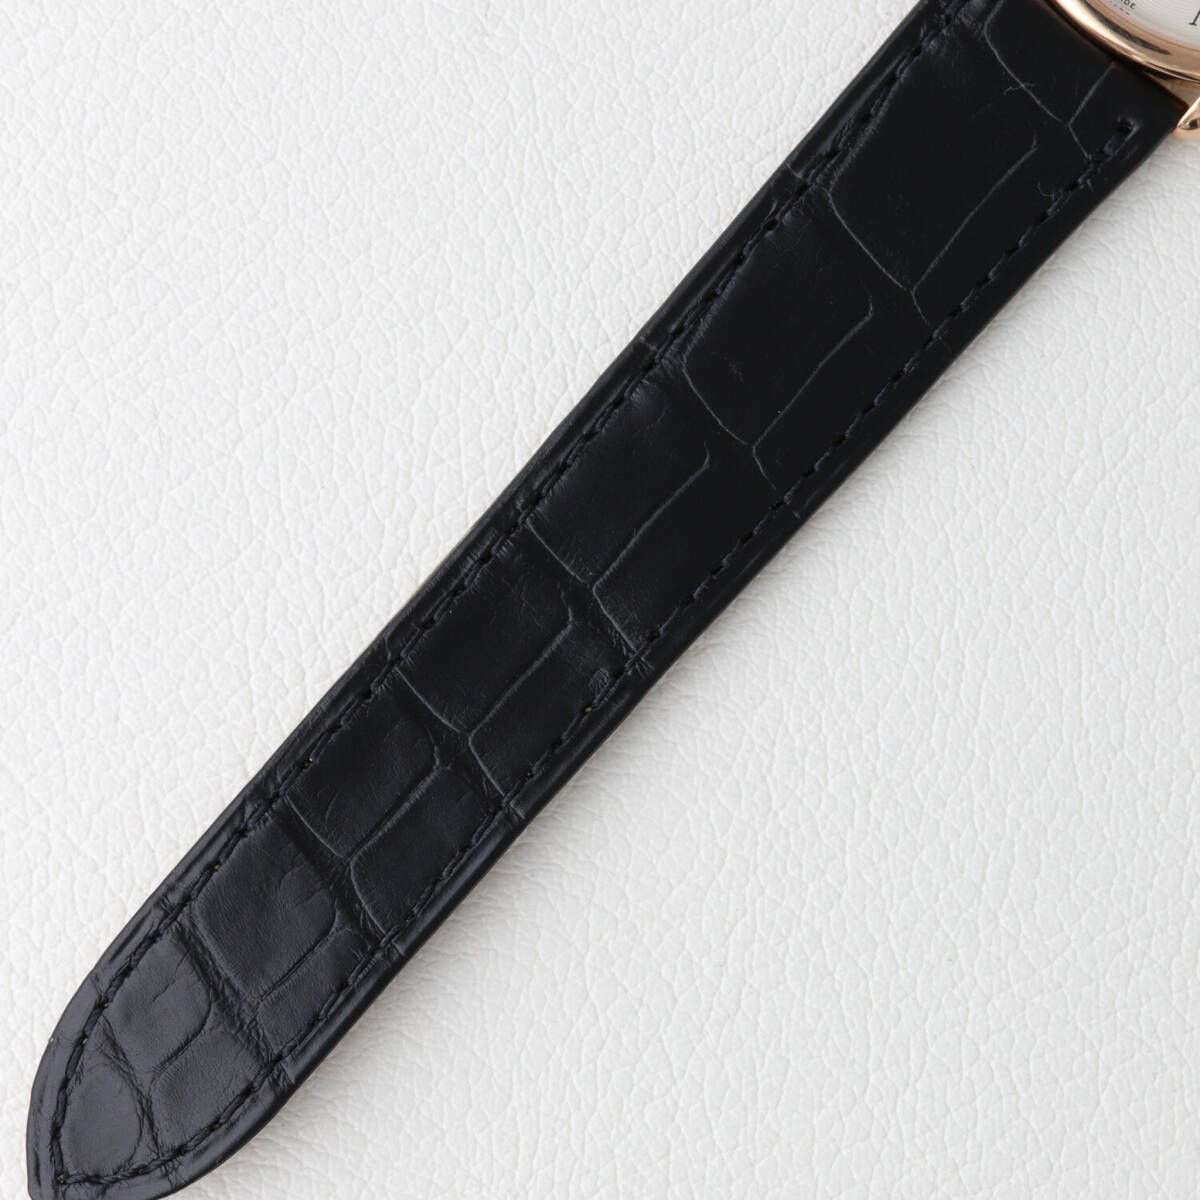  Cartier CPCP long doPG reverse side skeRef.2616G Cartier Vintage wristwatch 